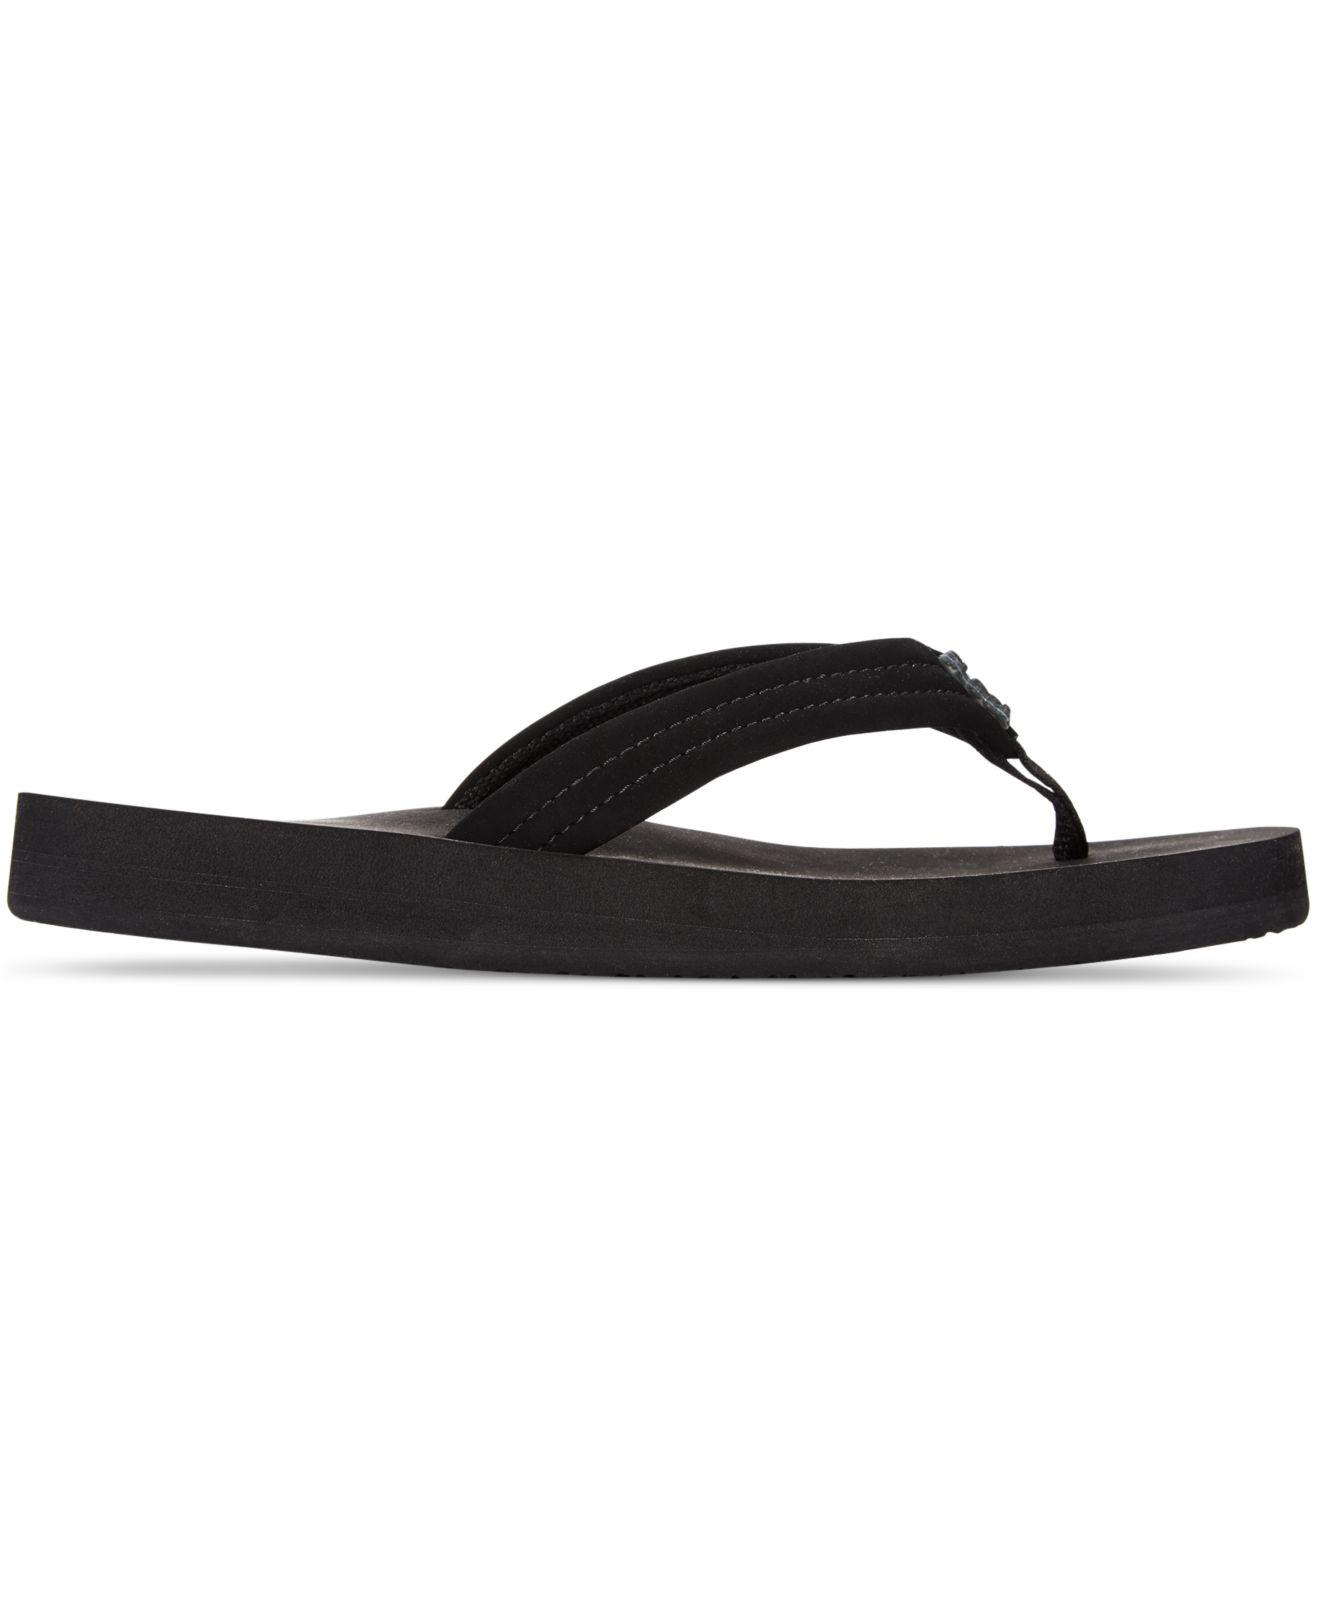 Reef Cushion Breeze Thong Flip-flop Flatform Sandals in Black - Lyst